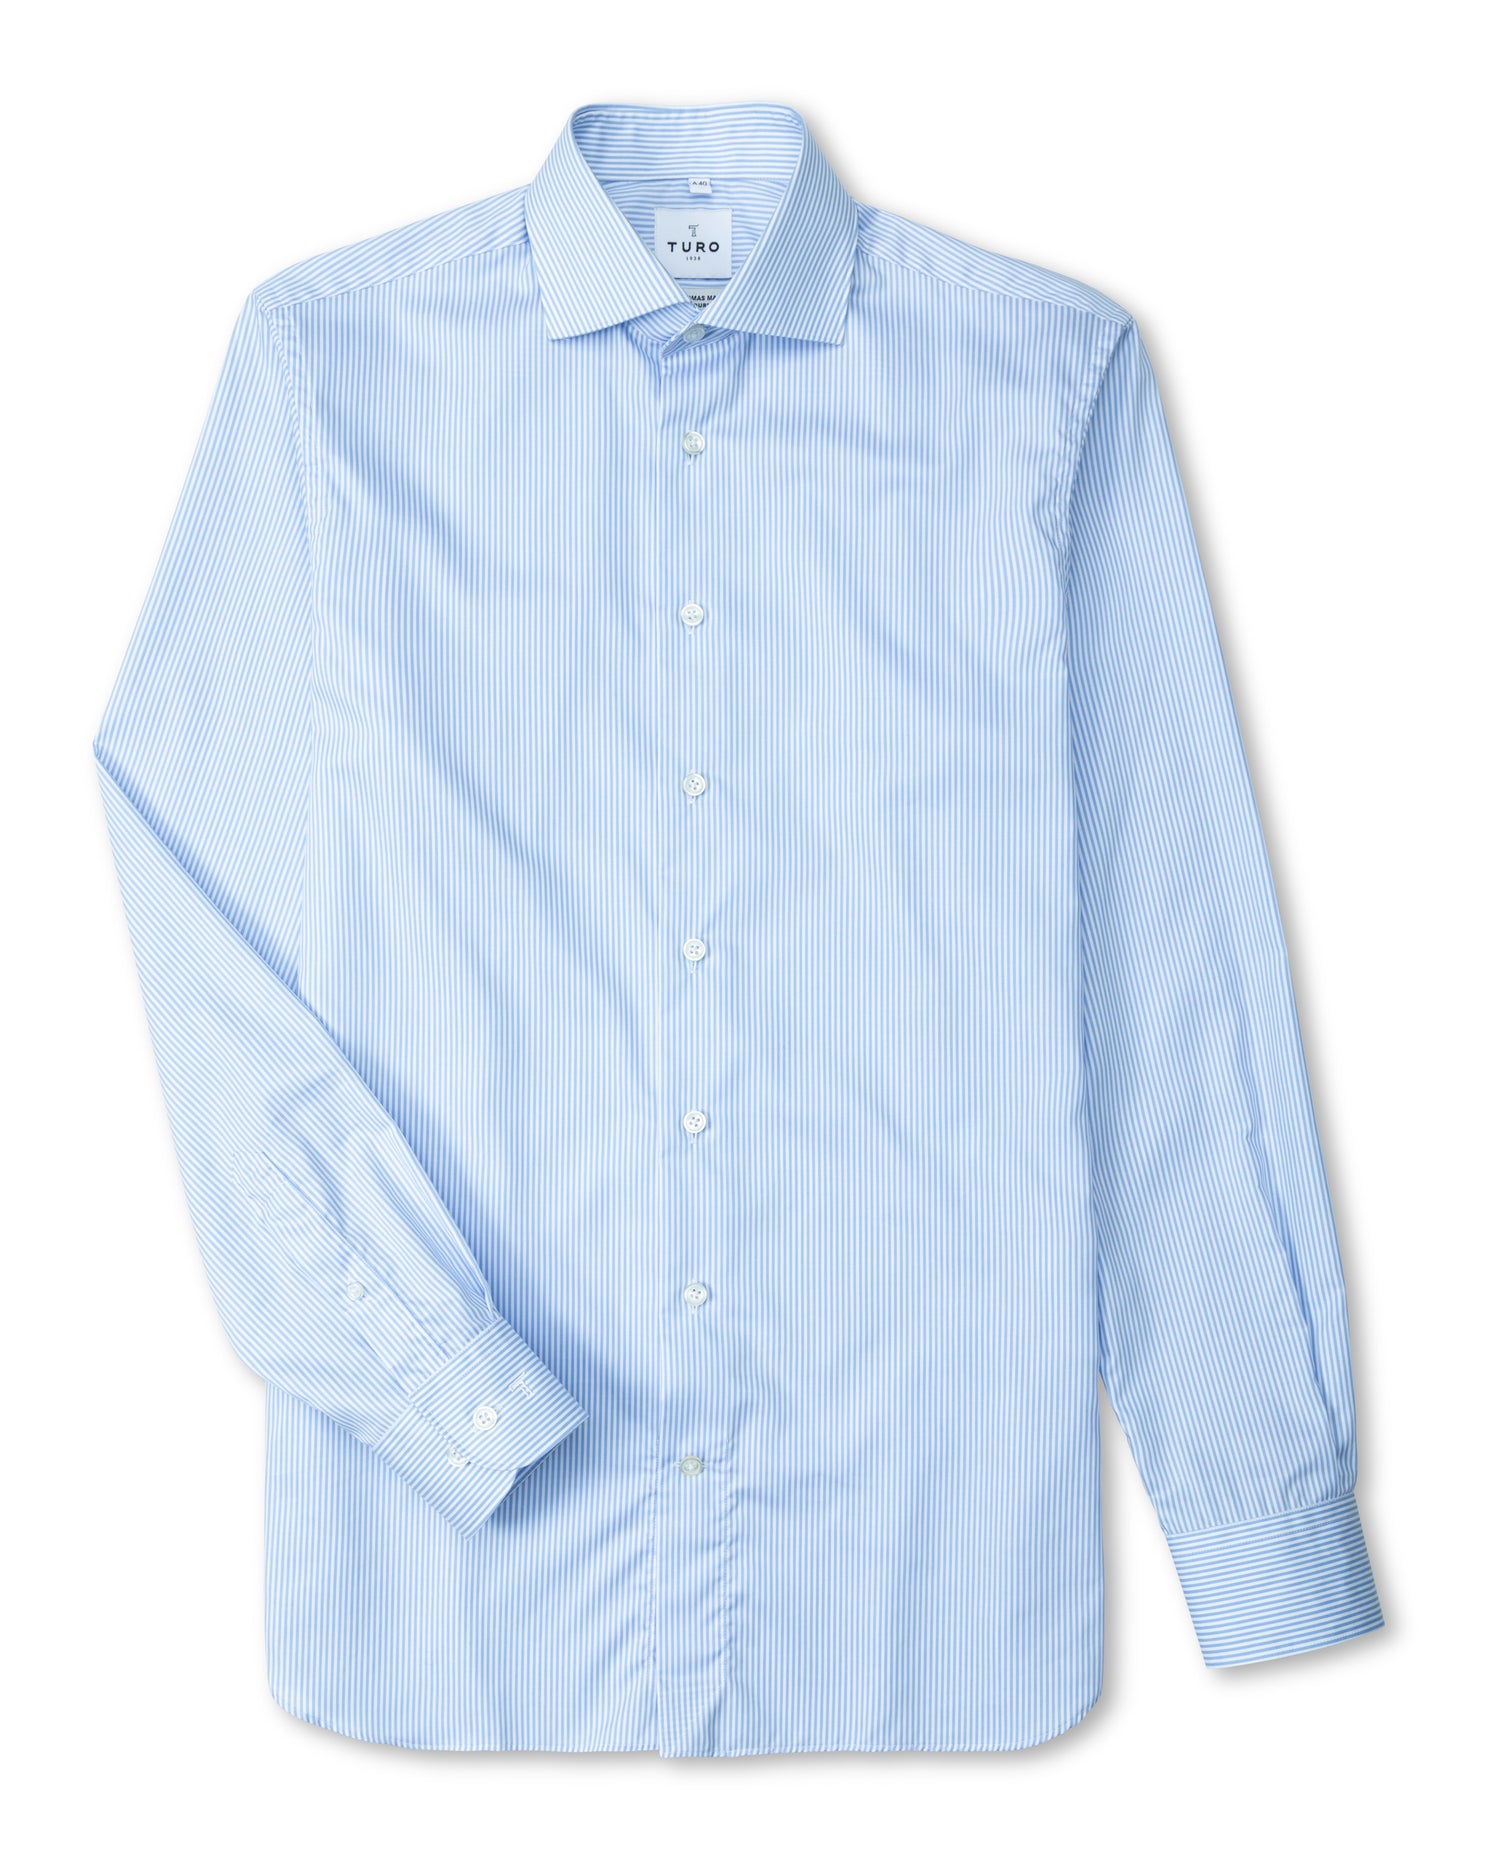 Slim fit shirt in blue stripe Thomas Mason journey (8489438970186)